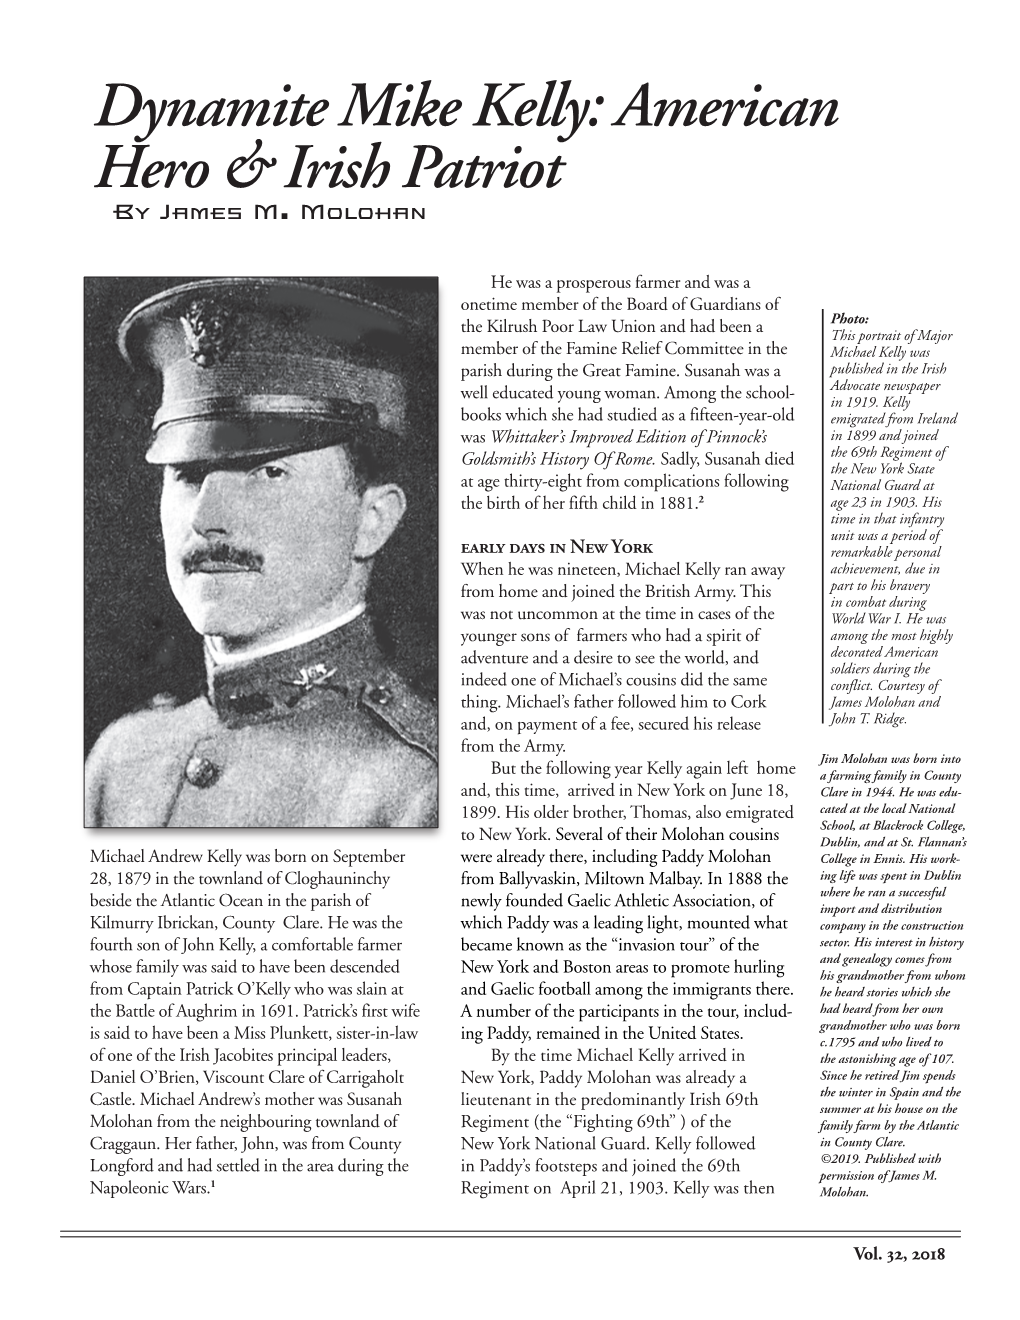 Dynamite Mike Kelly: American Hero & Irish Patriot by James M